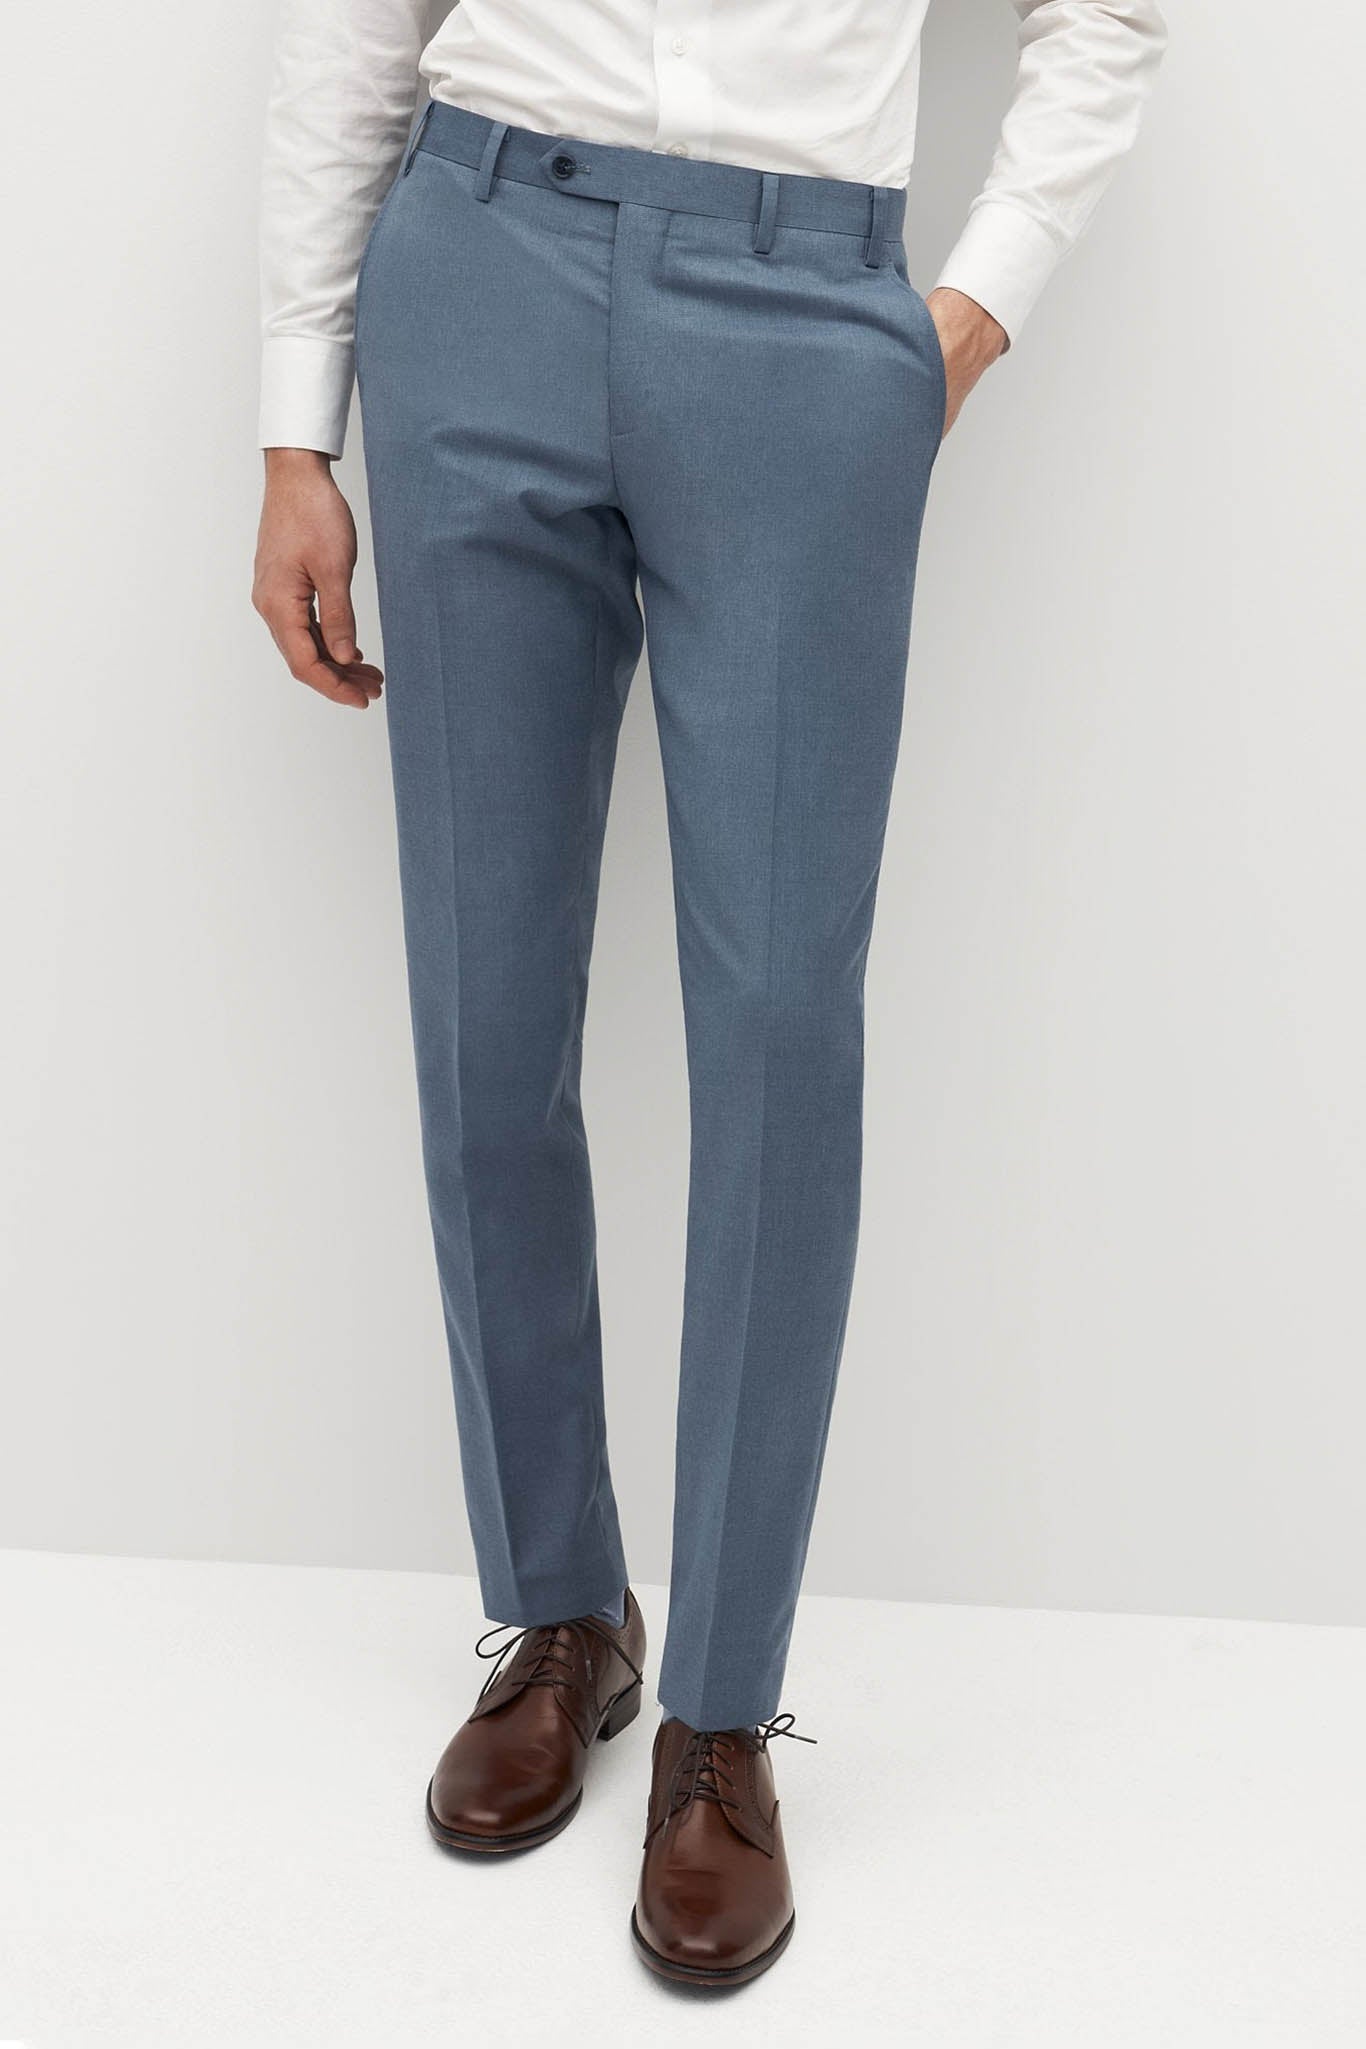 Men Summer Thin Business Formal Pants Solid Casual Korean Slim Fit Suit  Pants Mens Office Social Dress Ankle Length Trousers - Suit Pants -  AliExpress